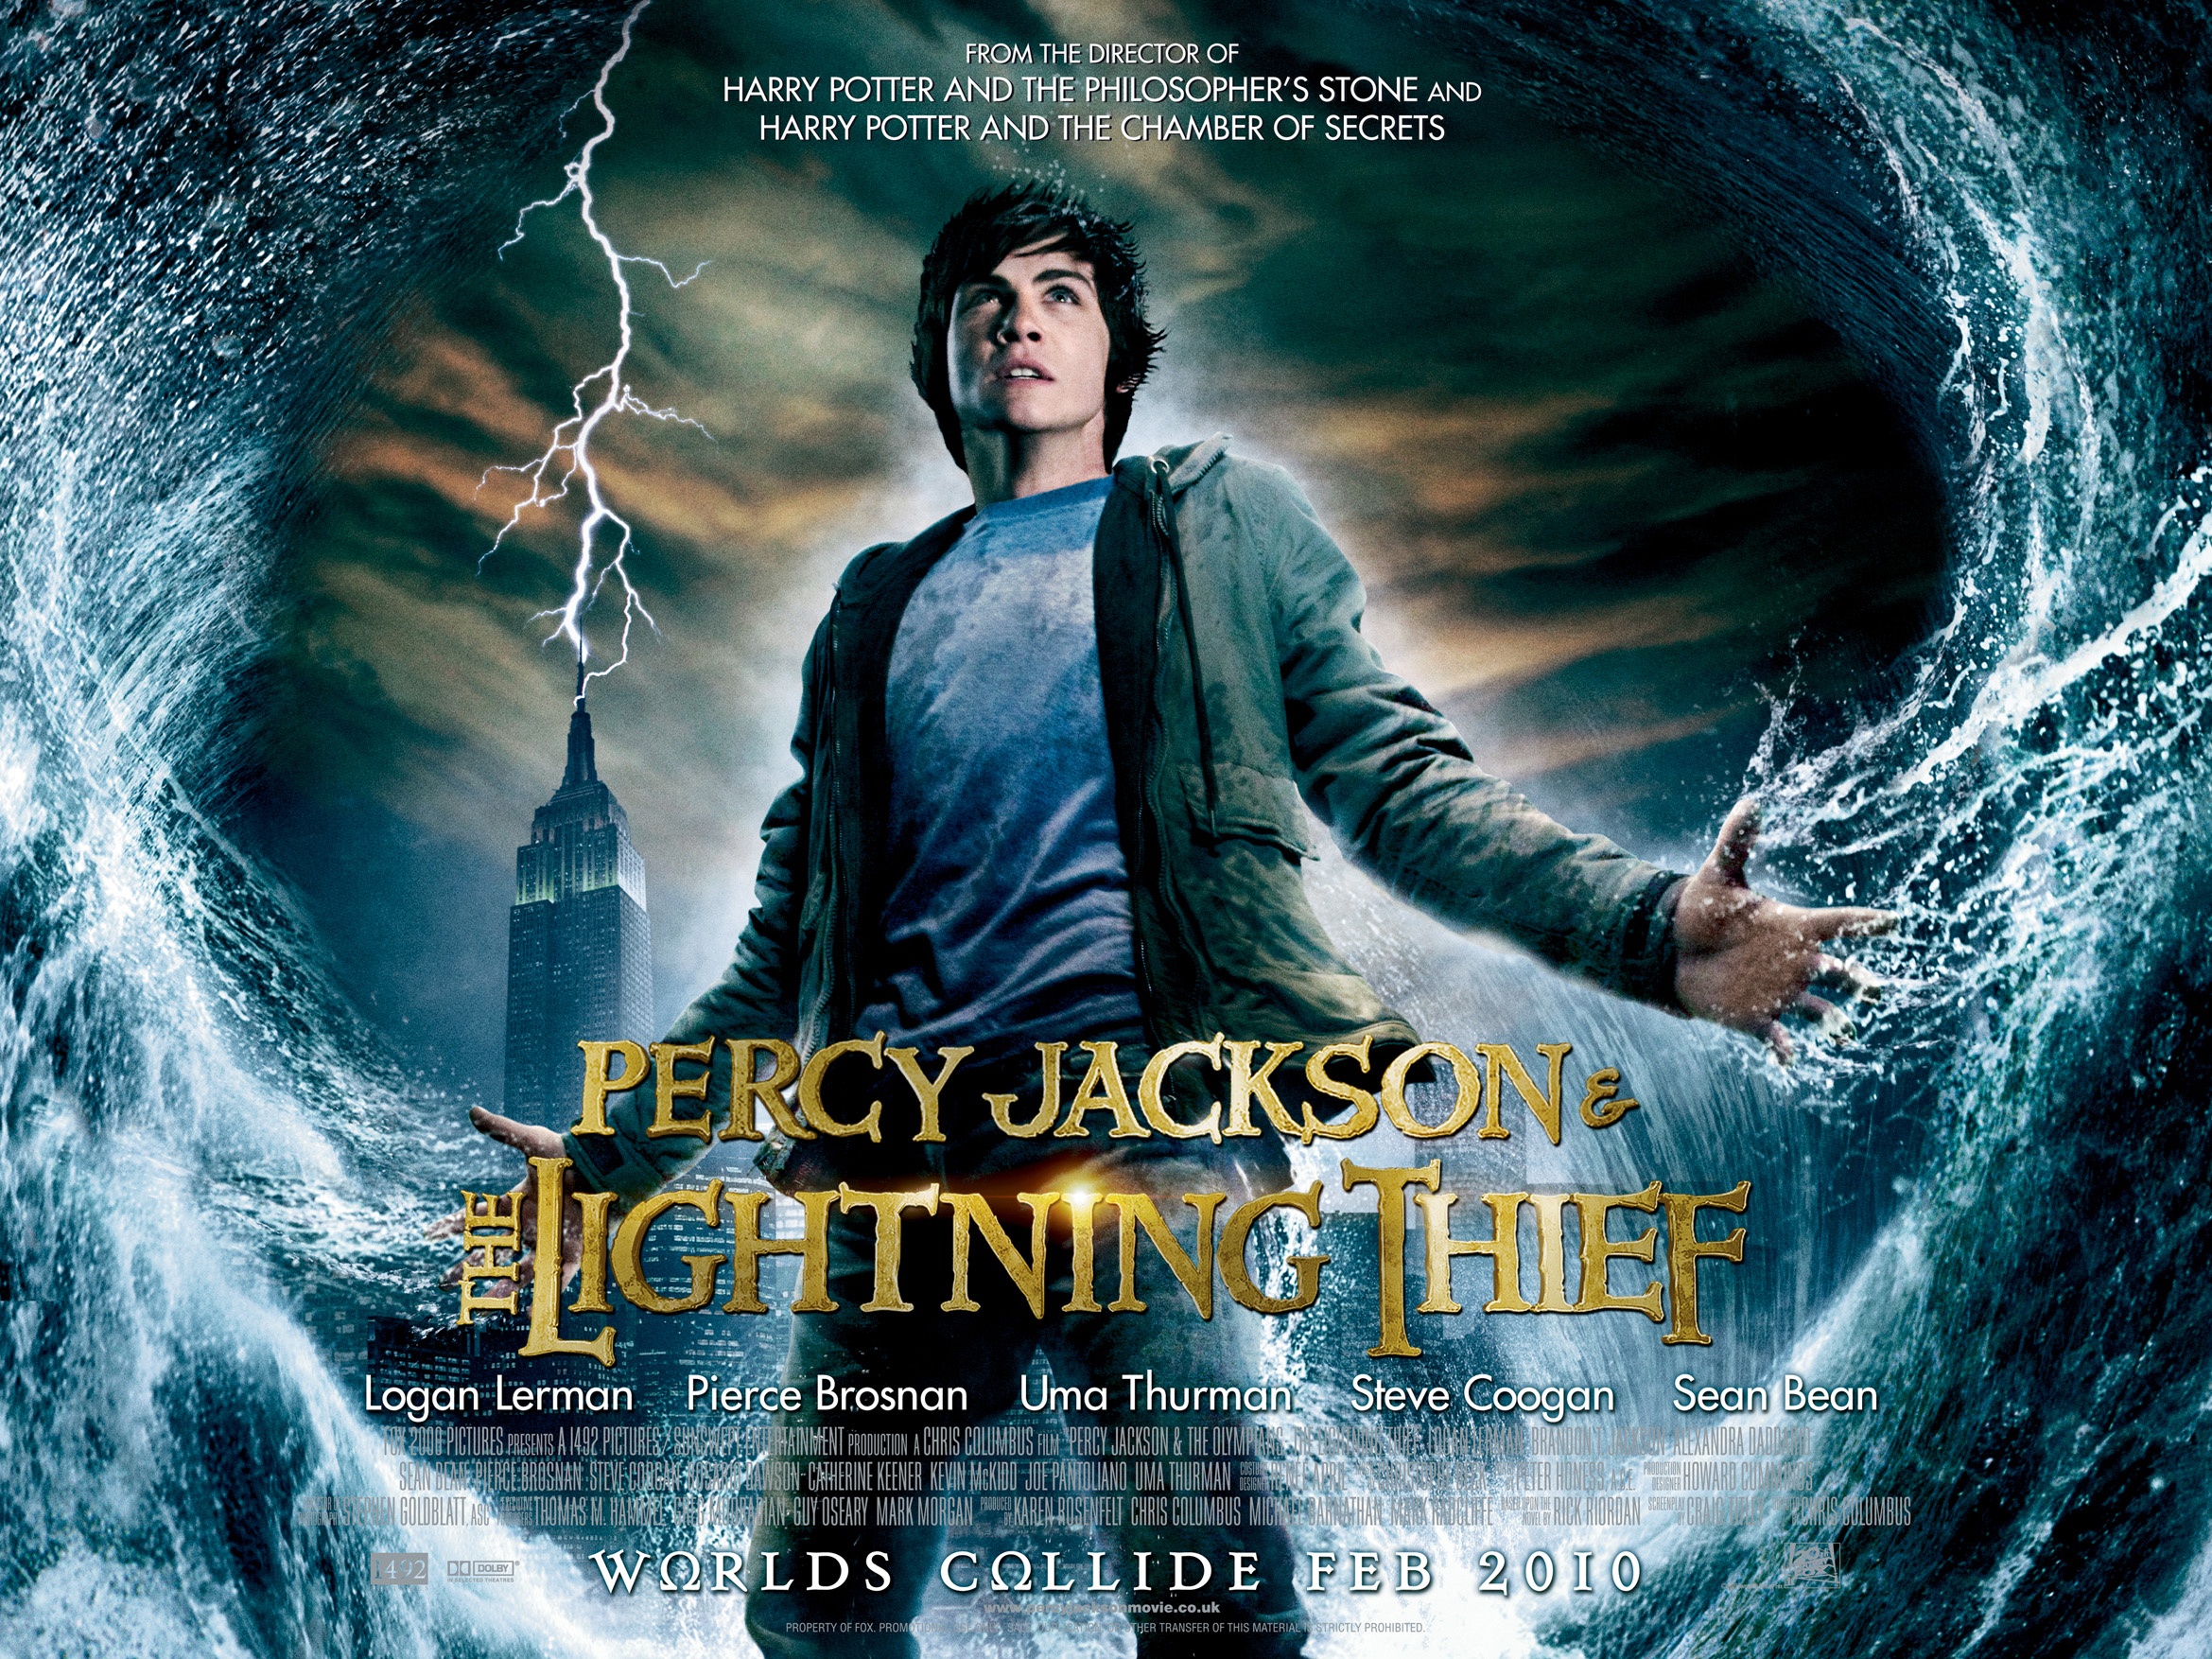 PERCY JACKSON & THE OLYMPIANS: THE LIGHTNING THIEF (2010)